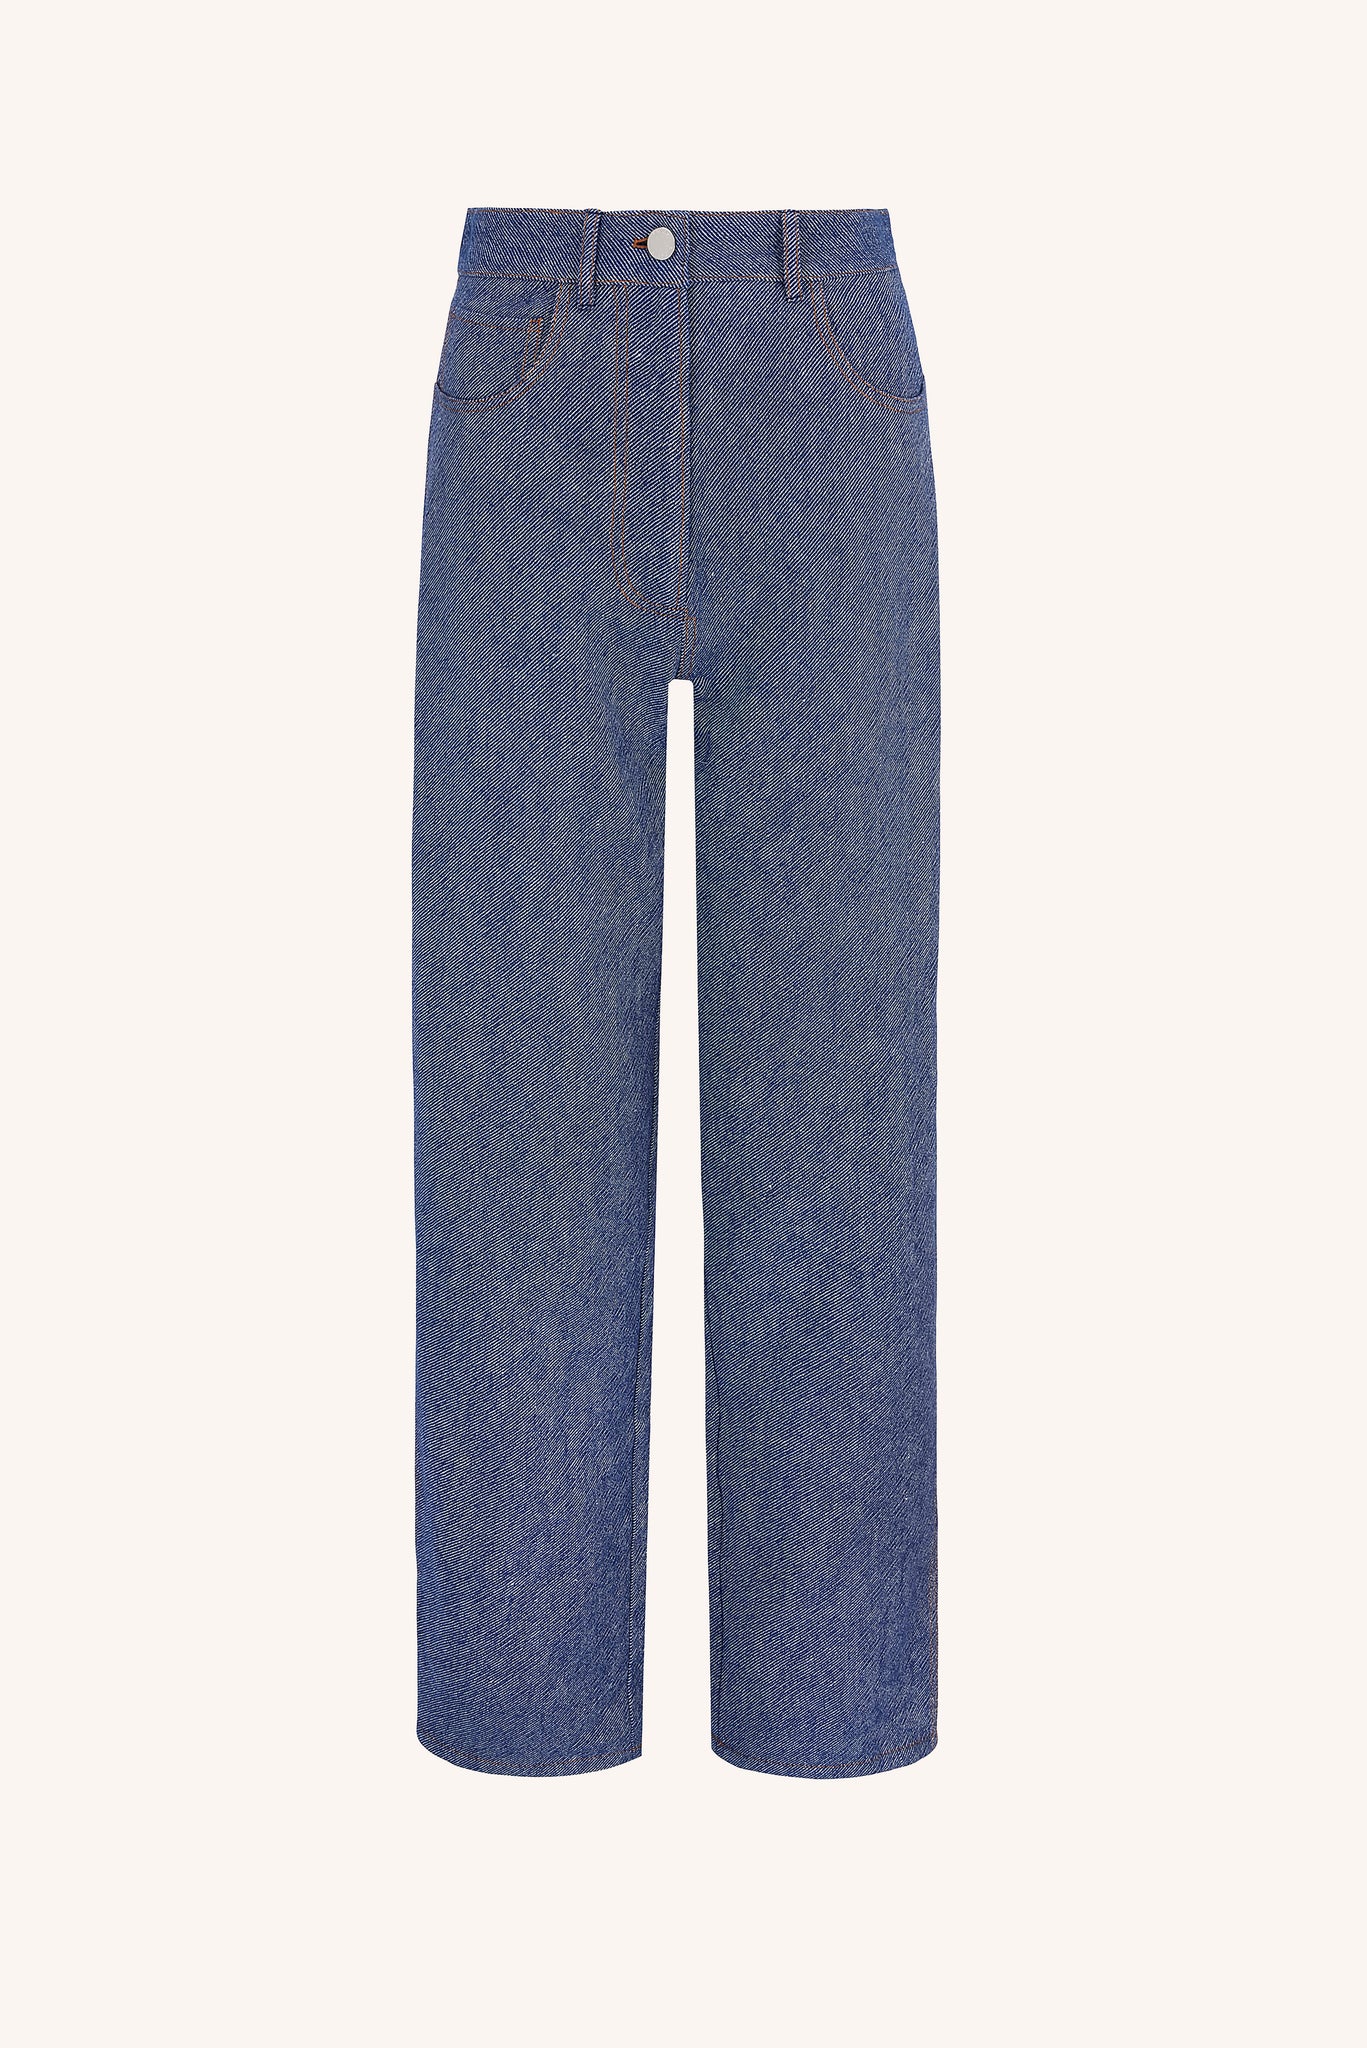 Ziggy Jeans In Indigo Linen Denim | Emilia Wickstead